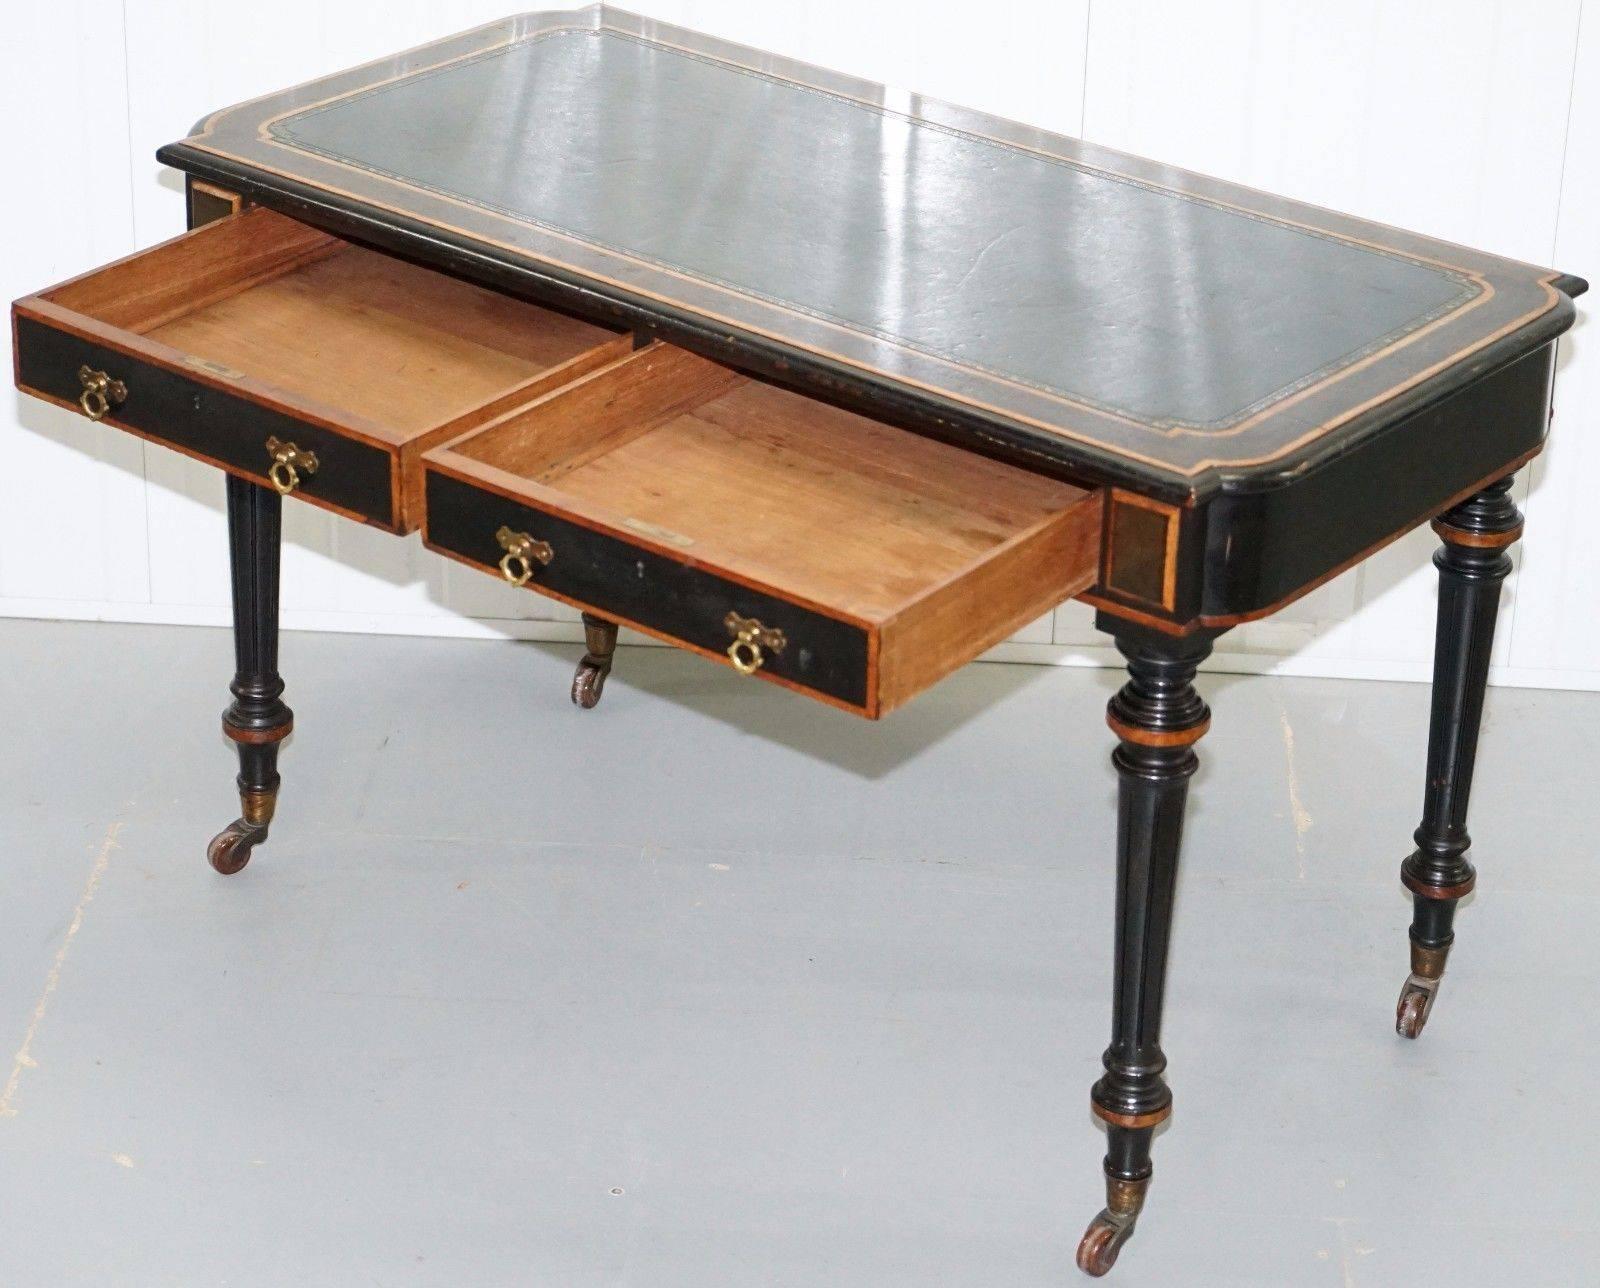 British Ebonized and Walnut Edwards and Roberts Writing Table Desk, circa 1860